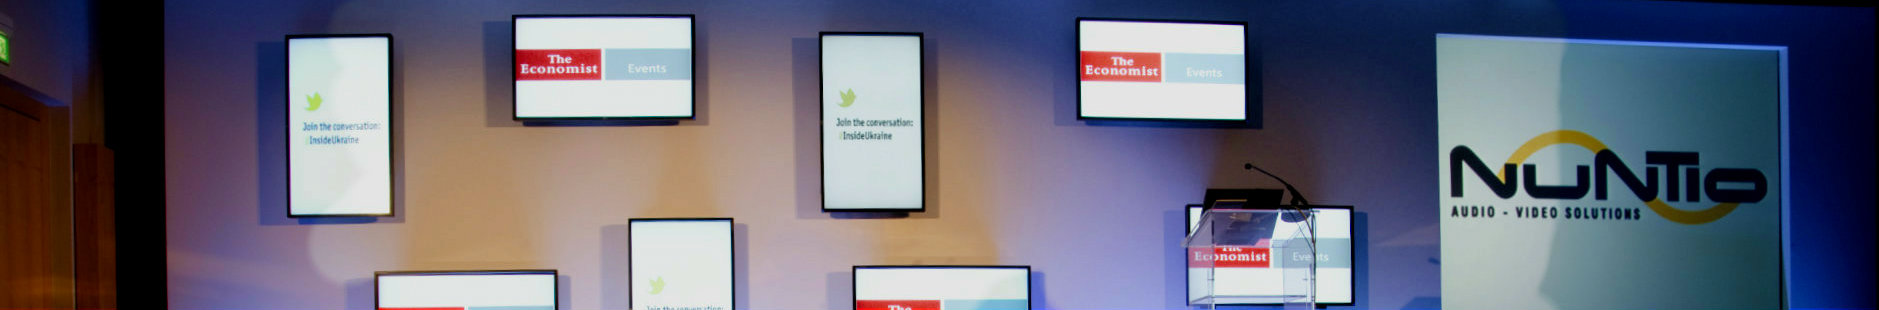 Screens, displays and video walls rental in Vienna and Austria, monitors, flatscreen